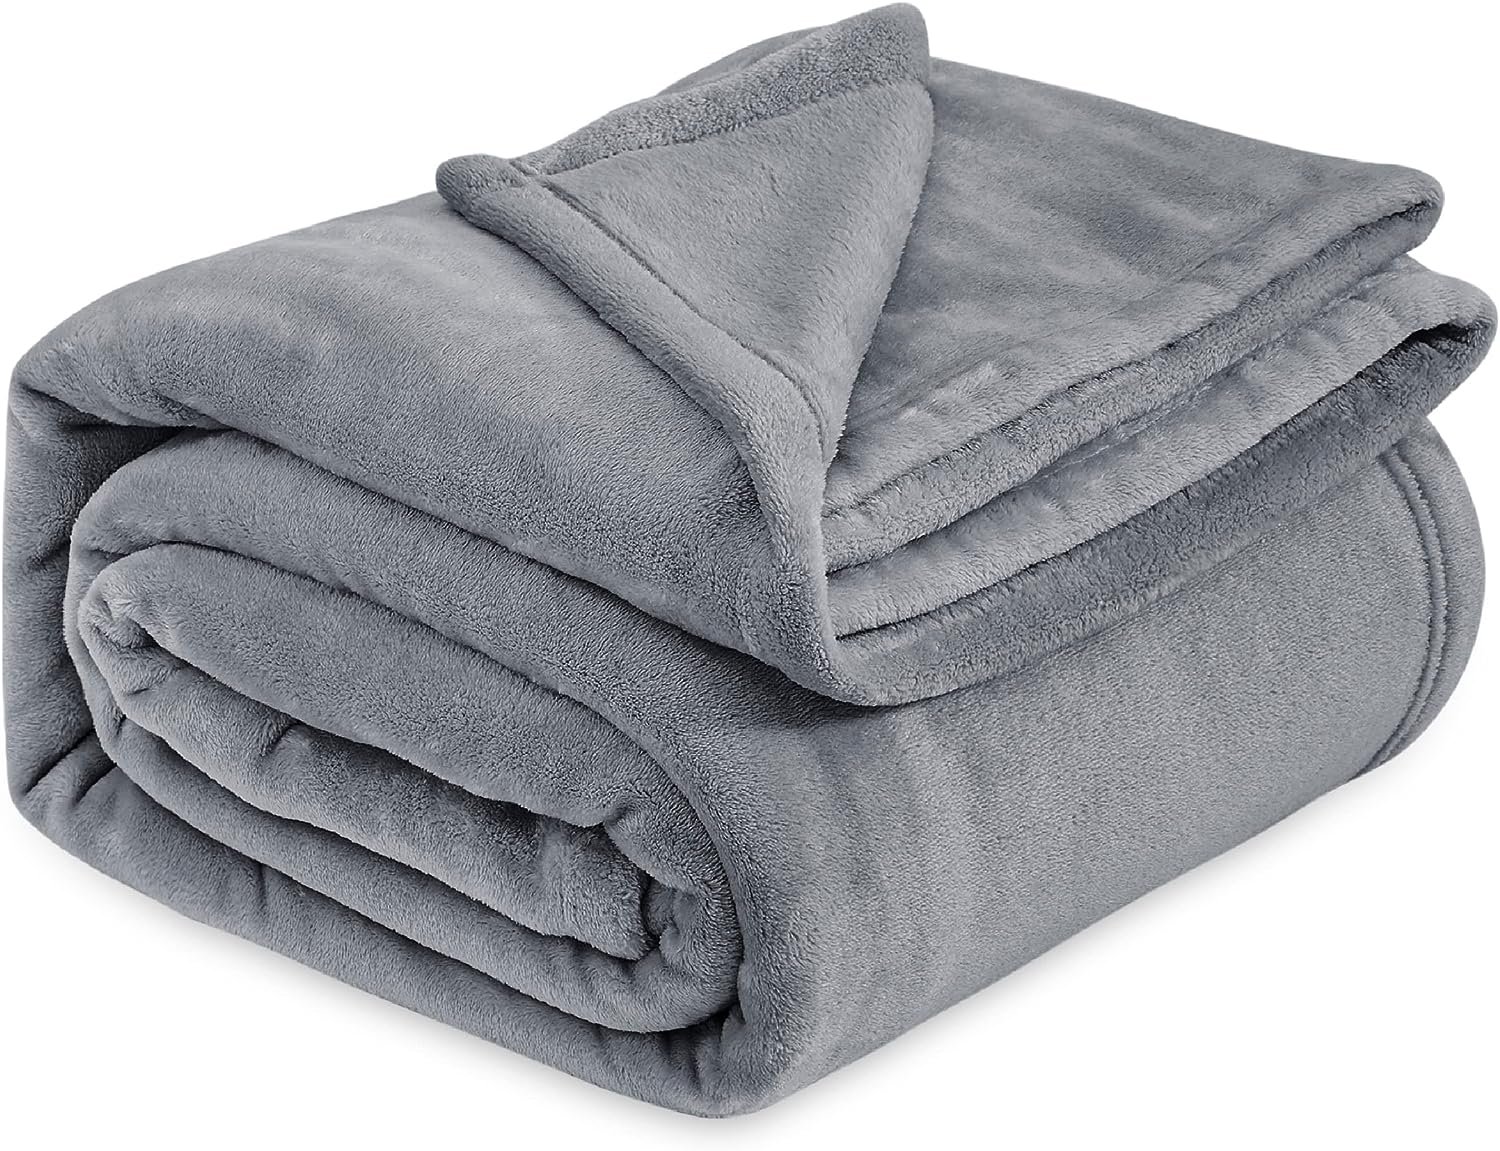 Bedsure Fleece Blanket Queen Blanket Washed Blue - Bed Blanket Soft Lightweight Plush Fuzzy Cozy Luxury Microfiber